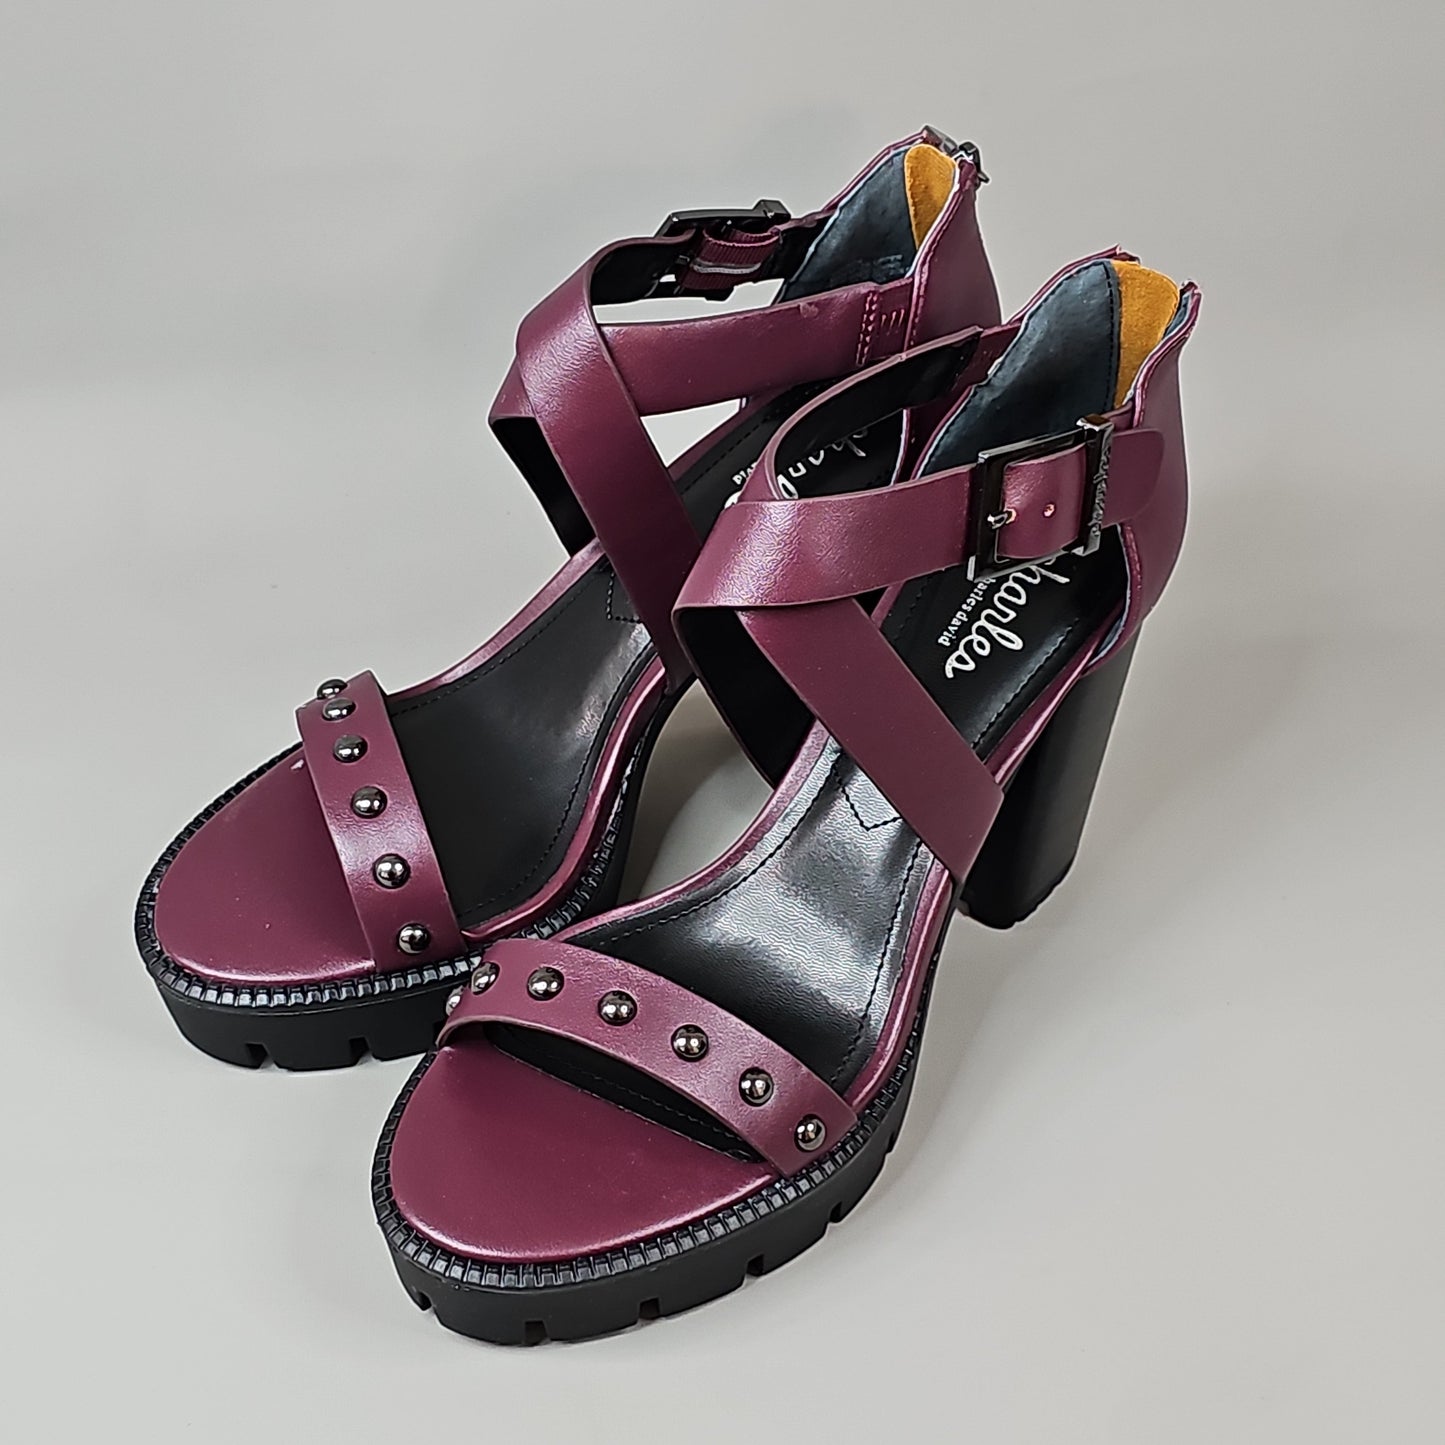 CHARLES BY CHARLES DAVID Women's Vanden Studded Sandal Shoe Sz 9M Burgundy (New)